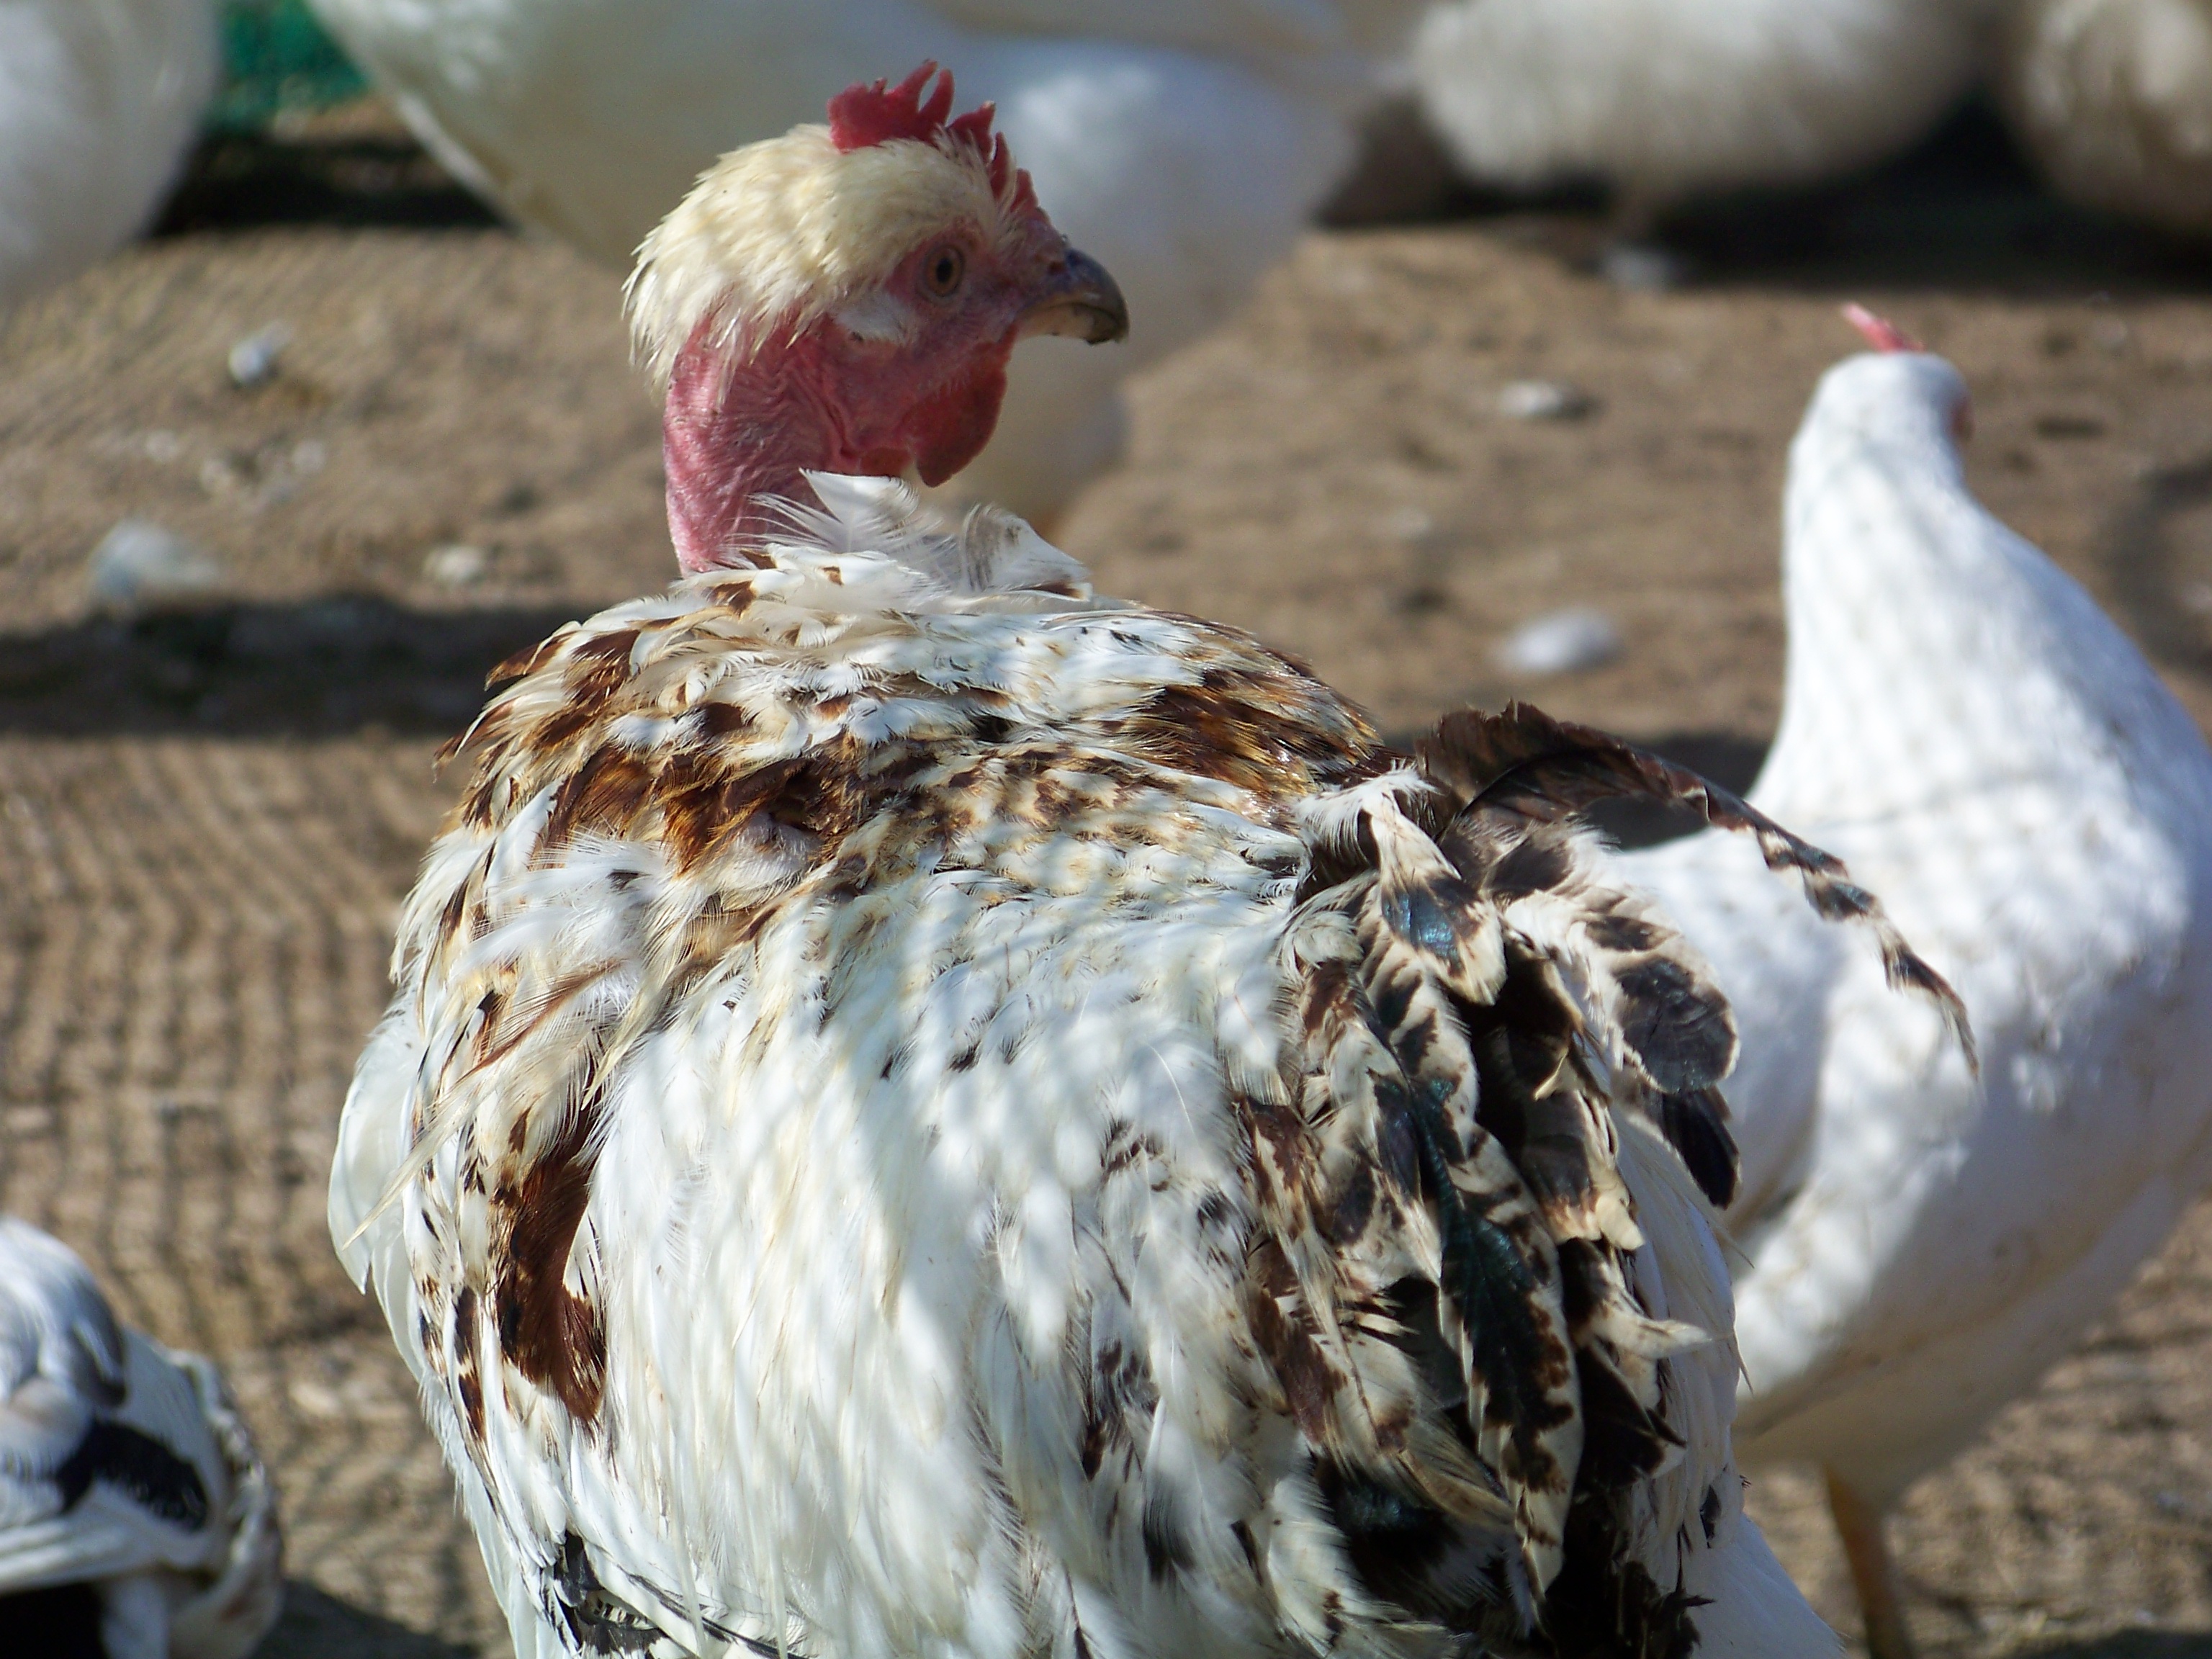 Rusty (NN roo) - being fabulous. Mama (white Leghorn bantam hen) behind.